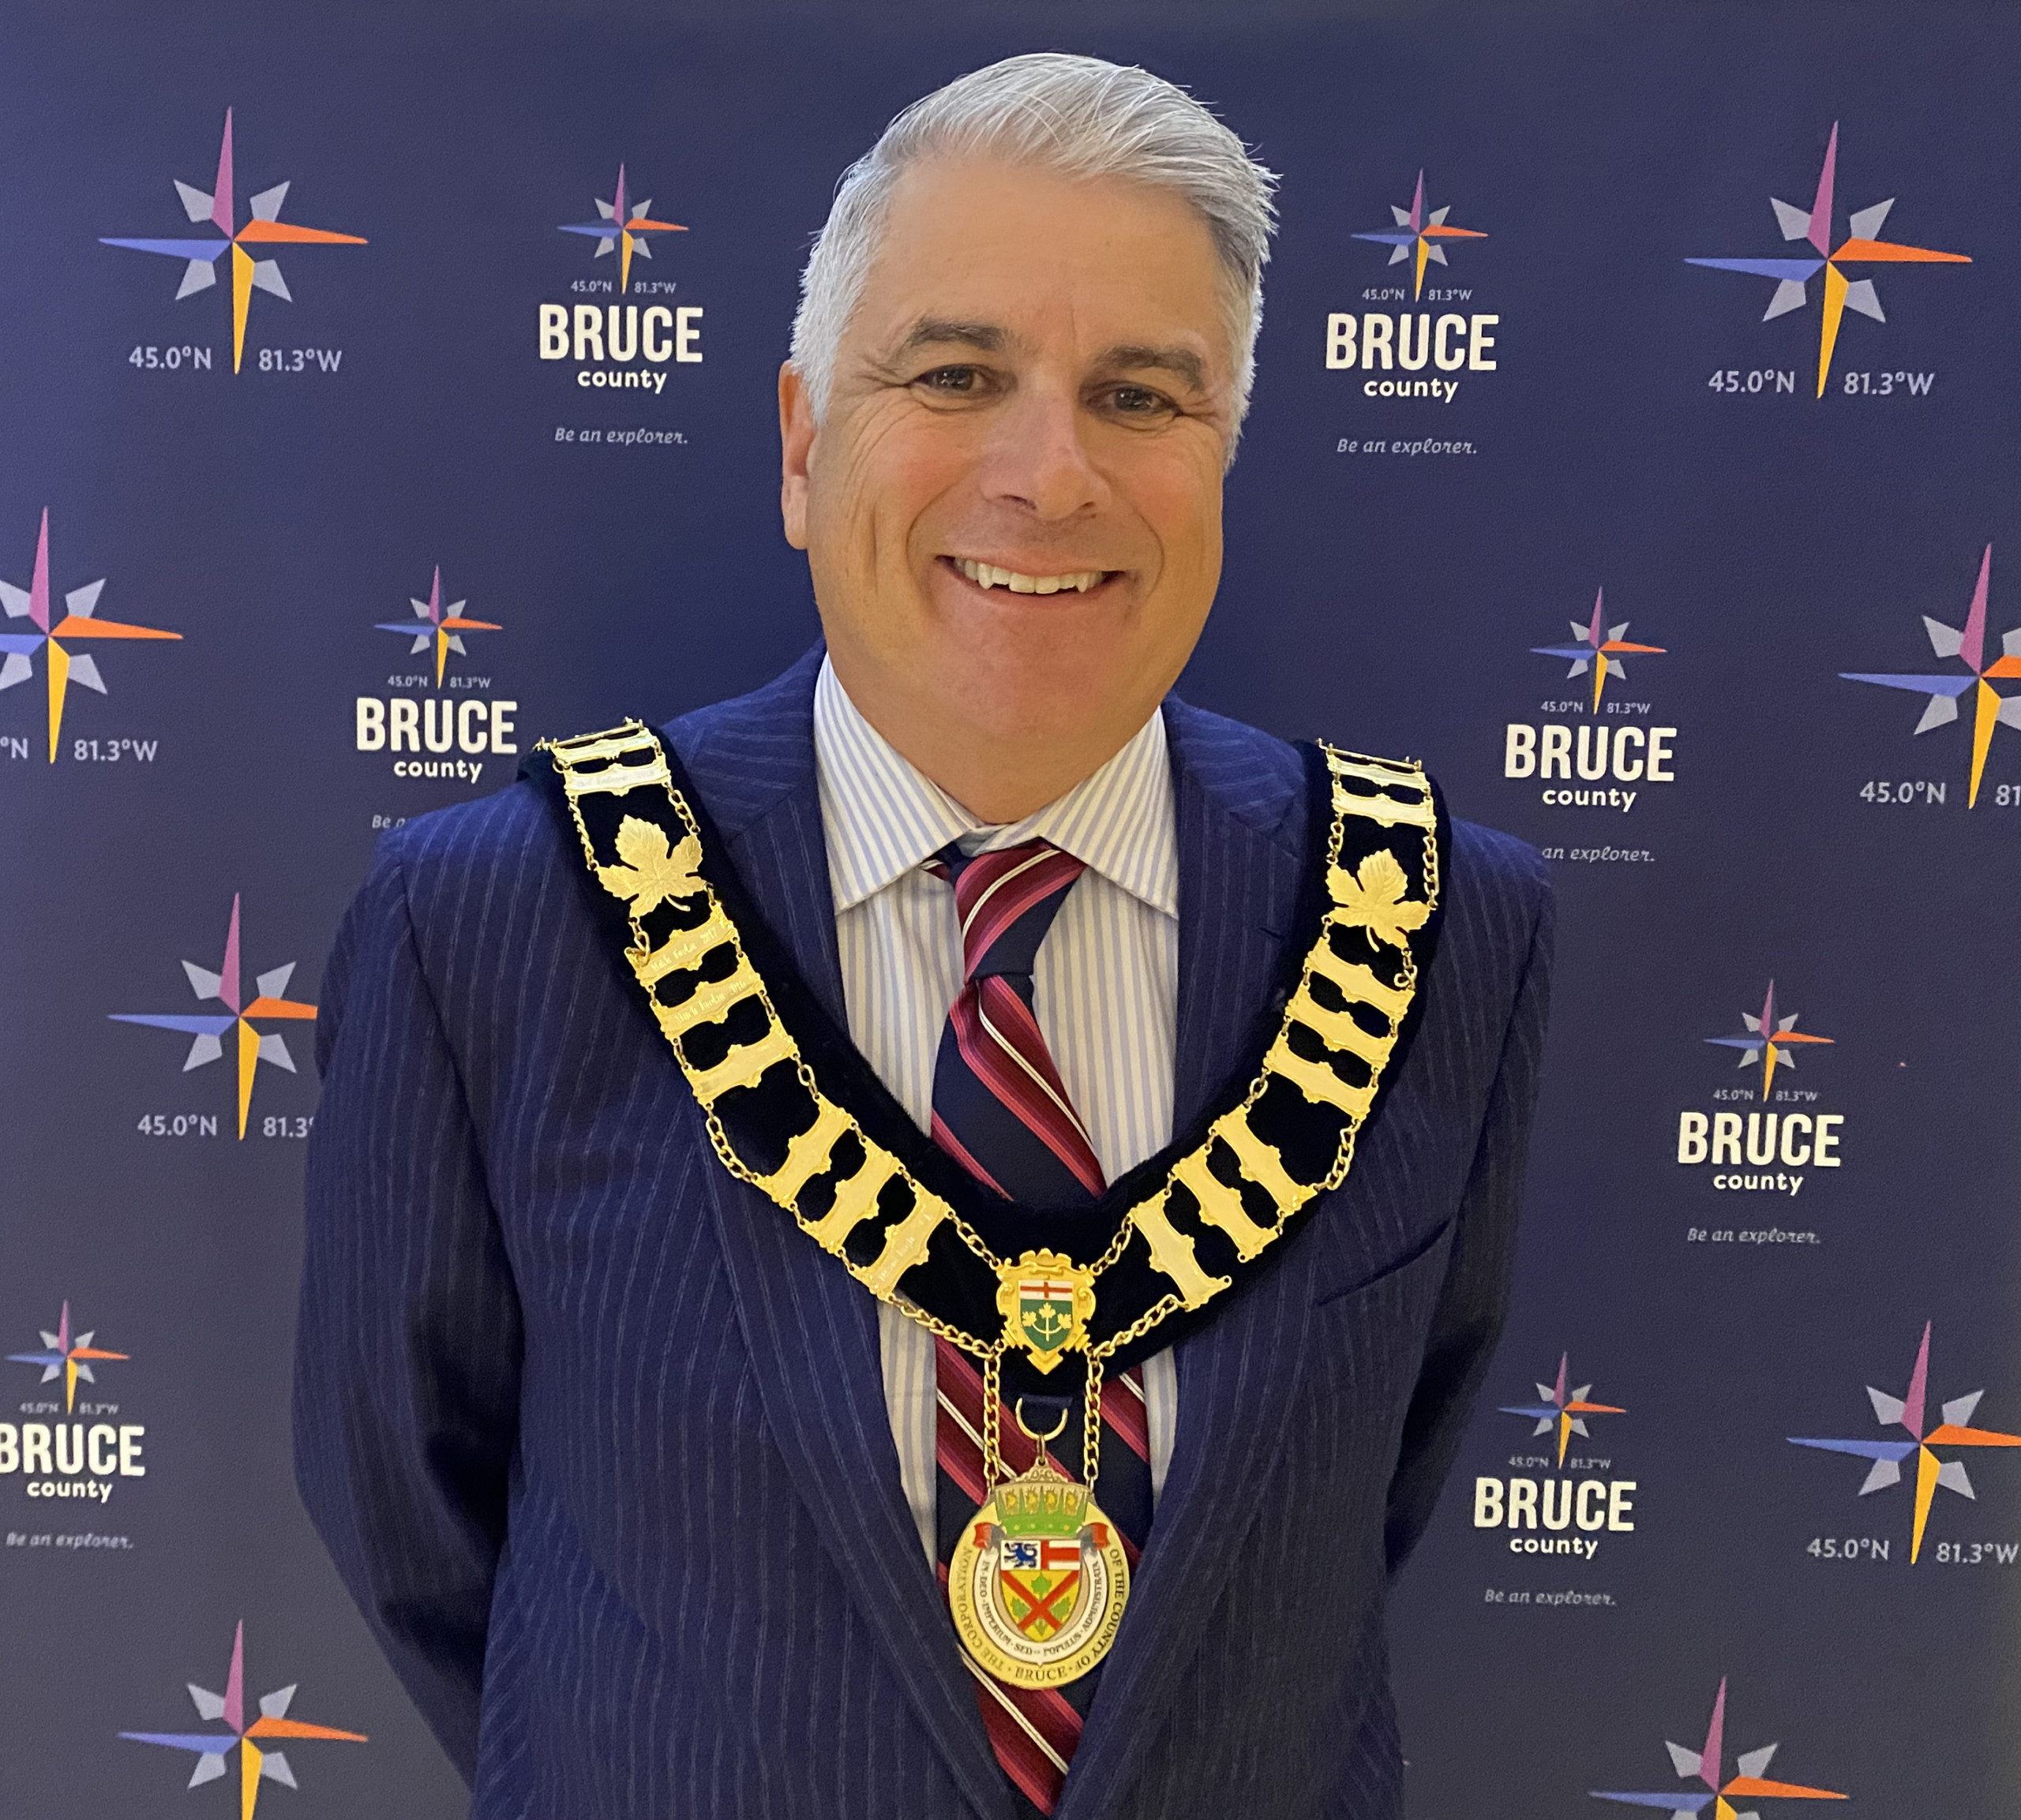 Brockton Mayor elected as Bruce County Warden